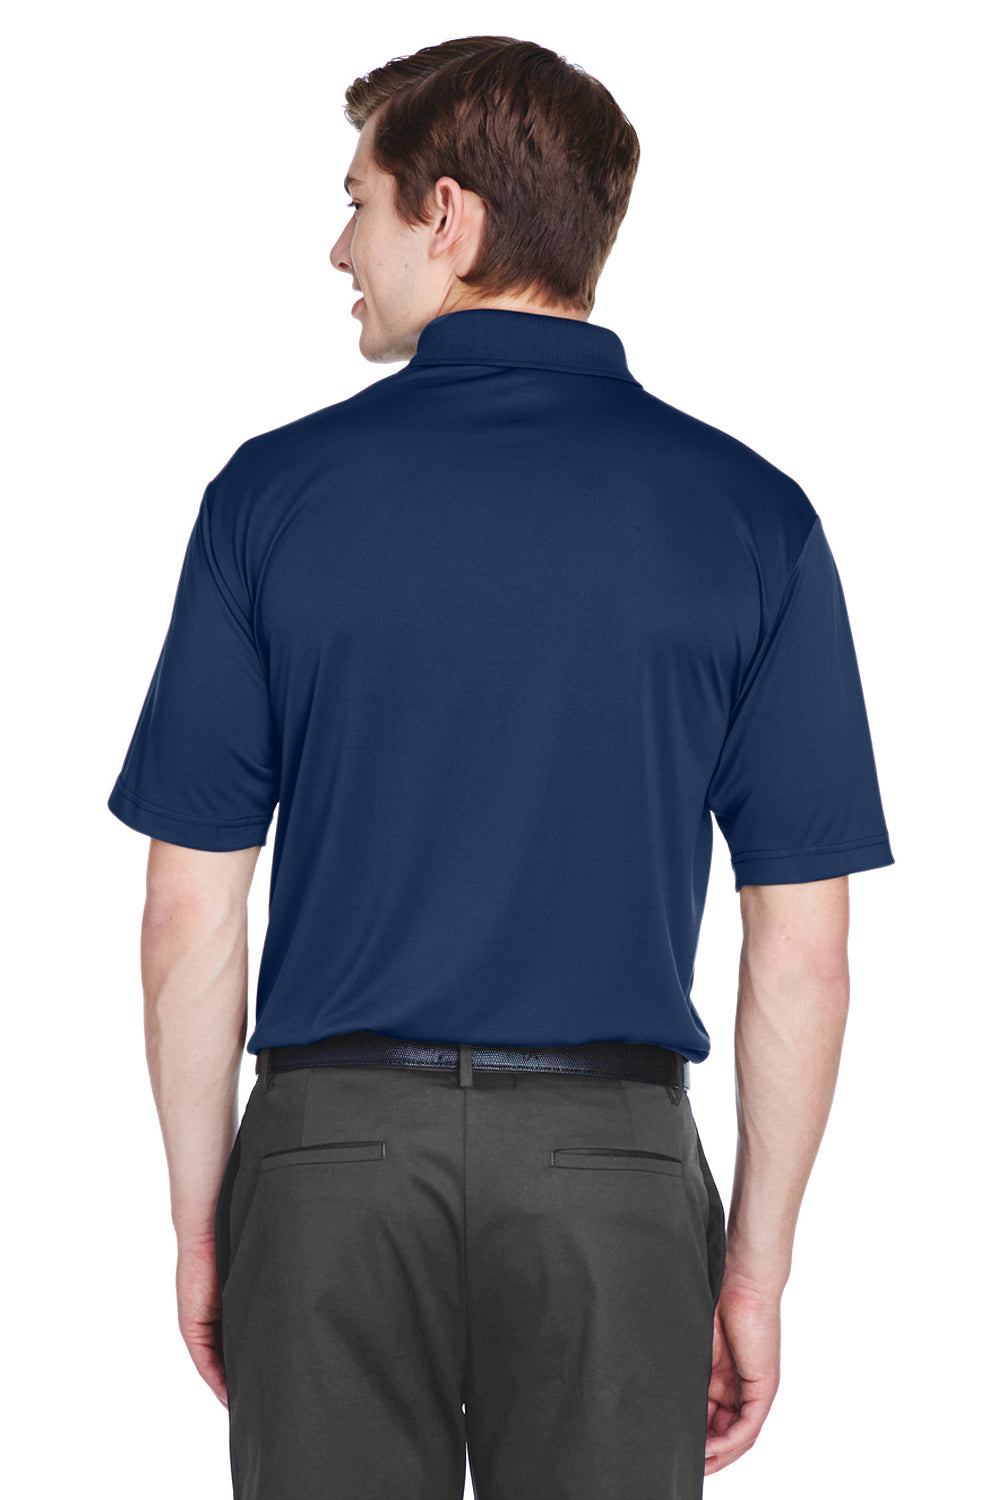 UltraClub 8610 Mens Cool & Dry 8 Star Elite Performance Moisture Wicking Short Sleeve Polo Shirt Navy Blue Back